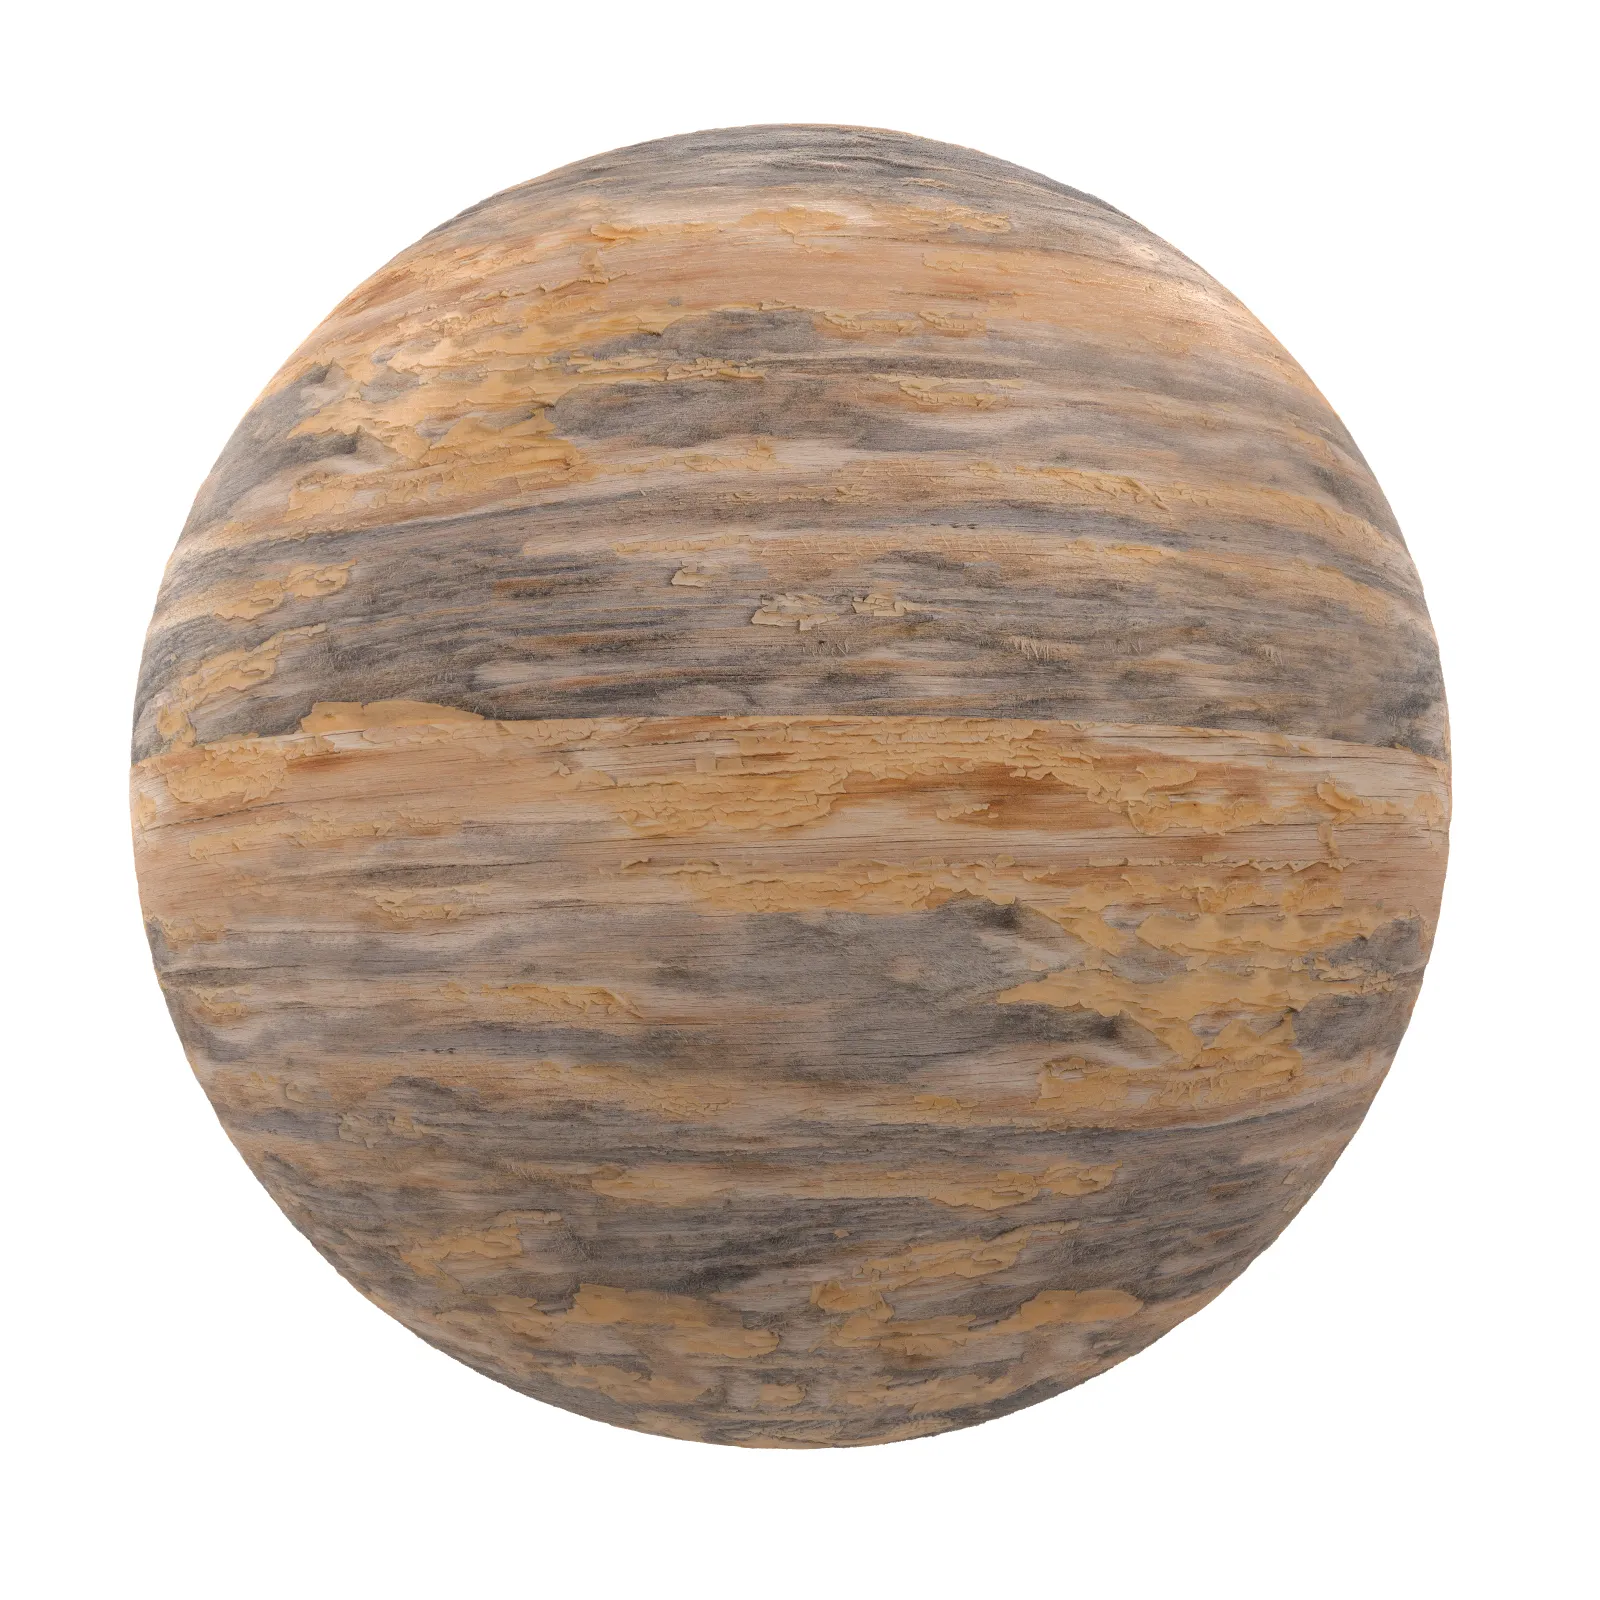 3ds Max Files – Texture – 8 – Wood Texture – 123 – Wood Texture by Minh Nguyen.